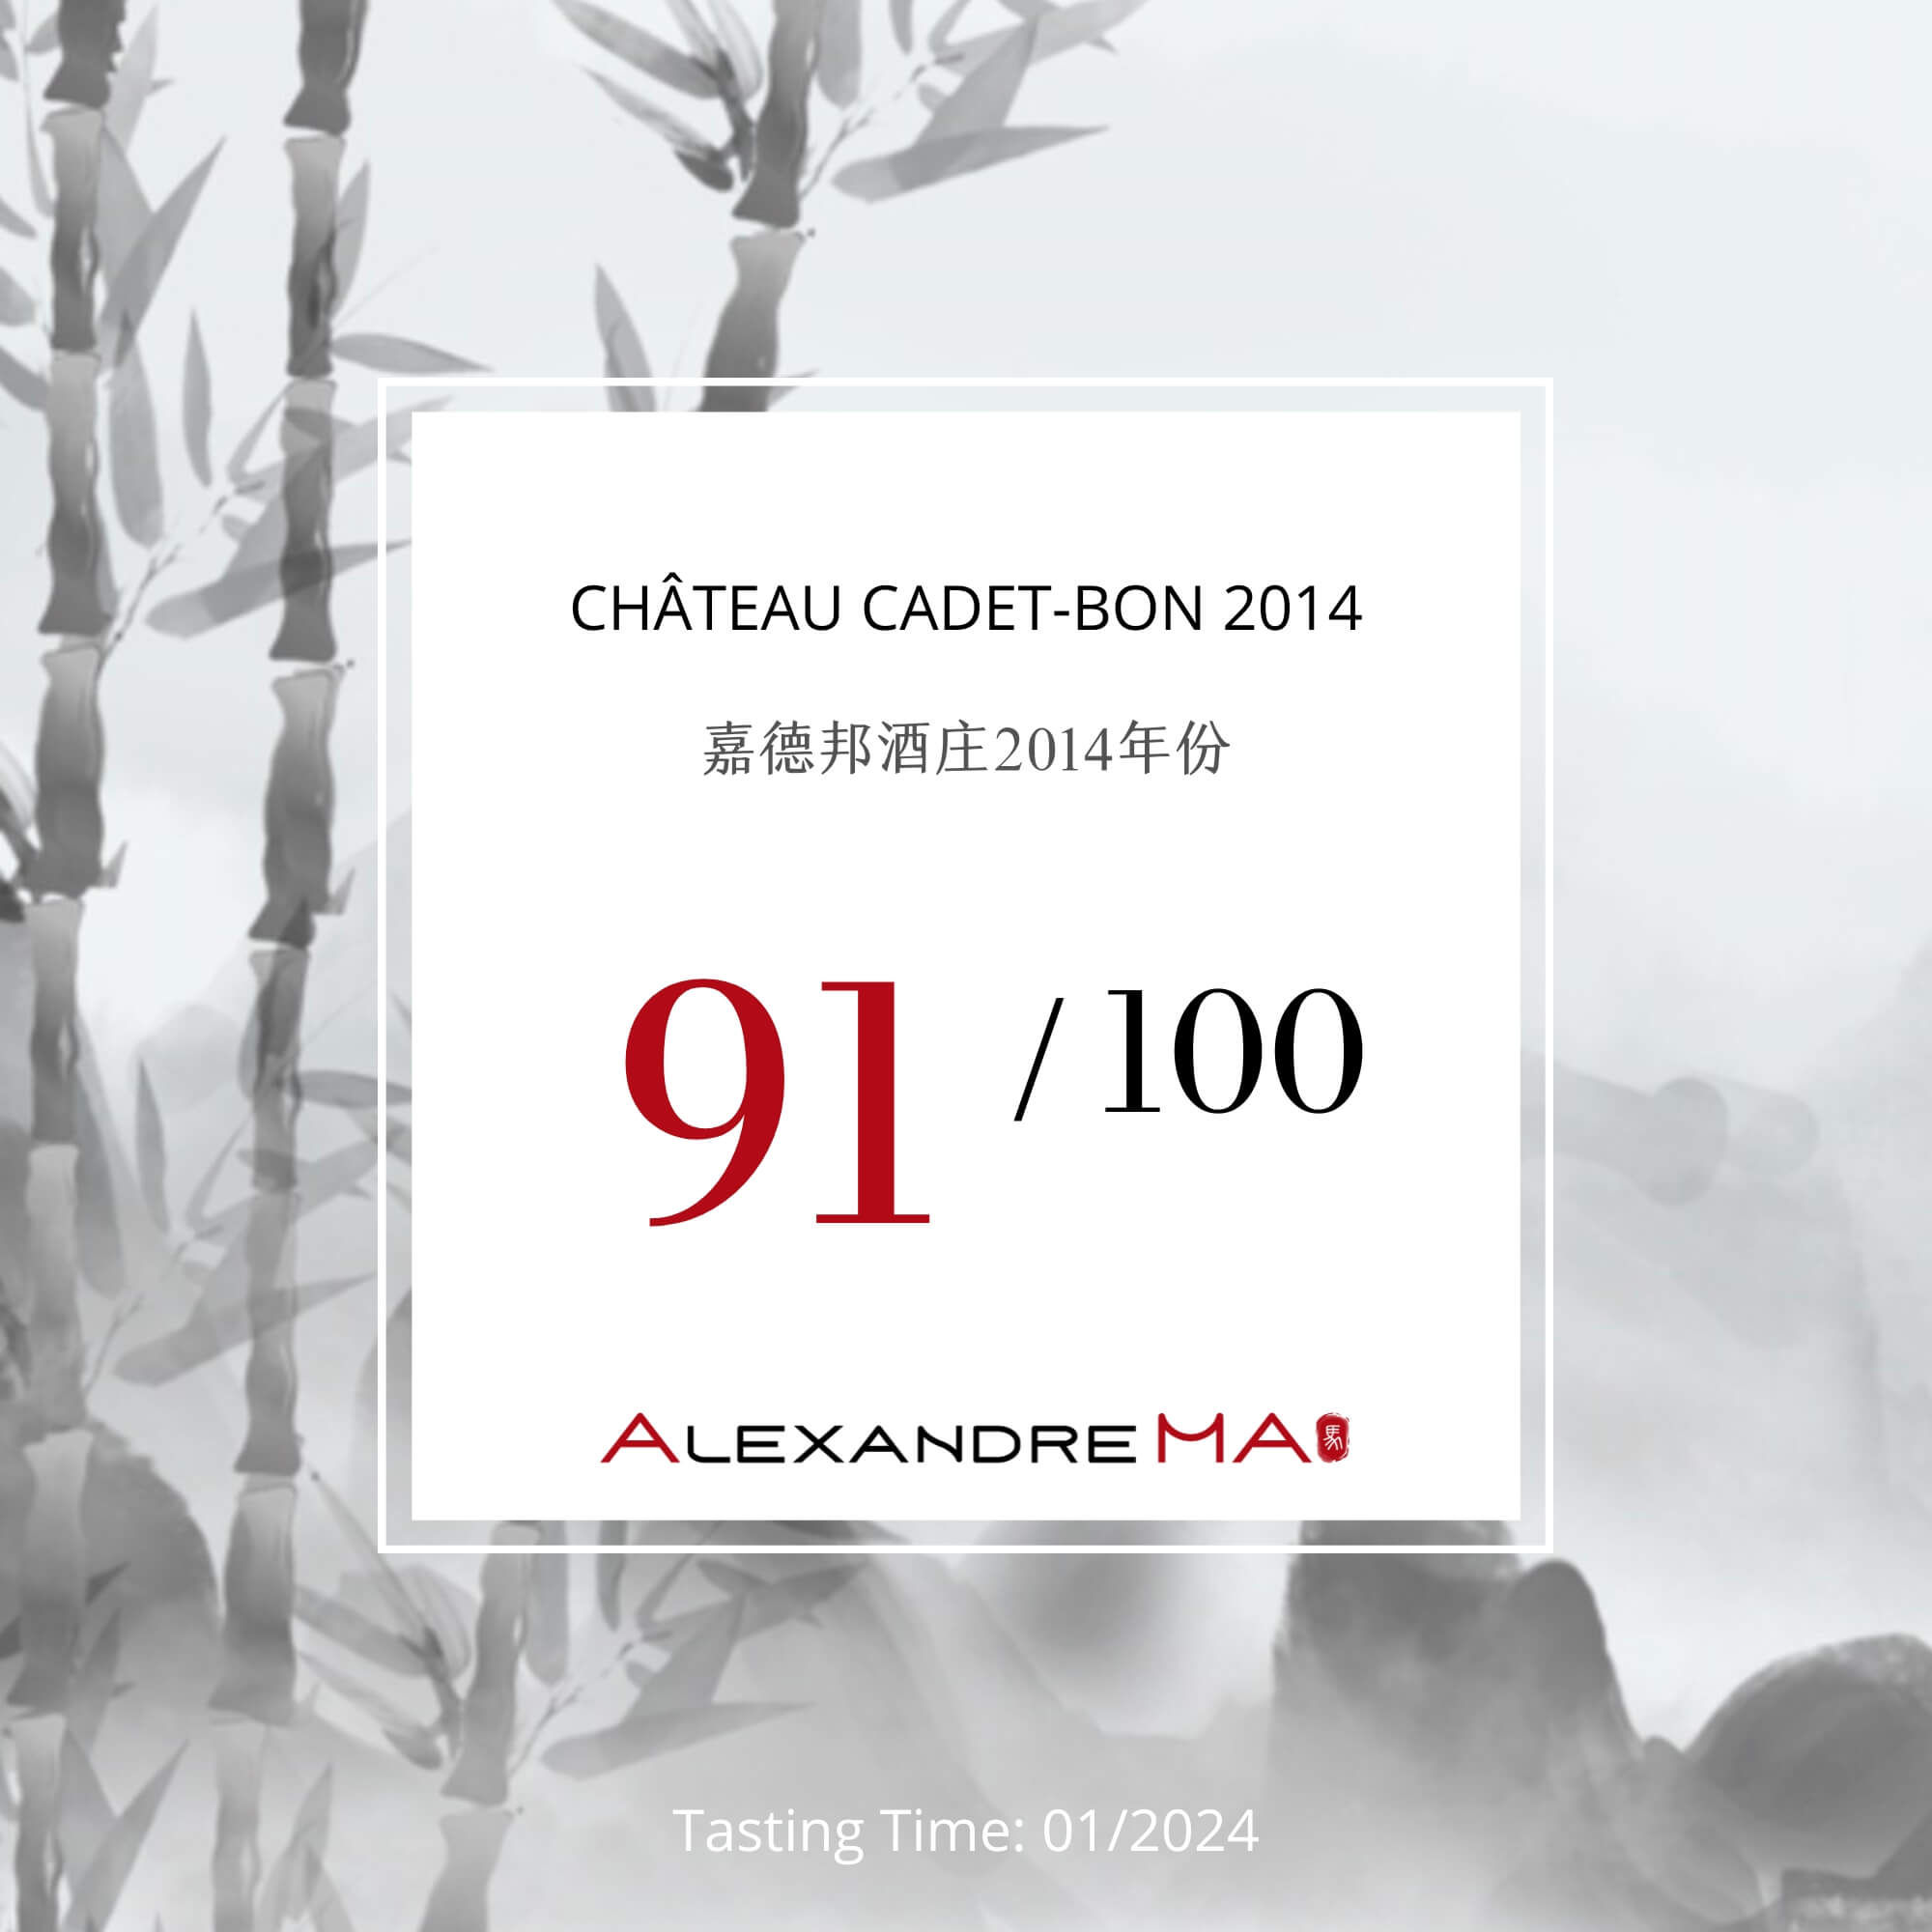 Château Cadet-Bon 2014 - Alexandre MA